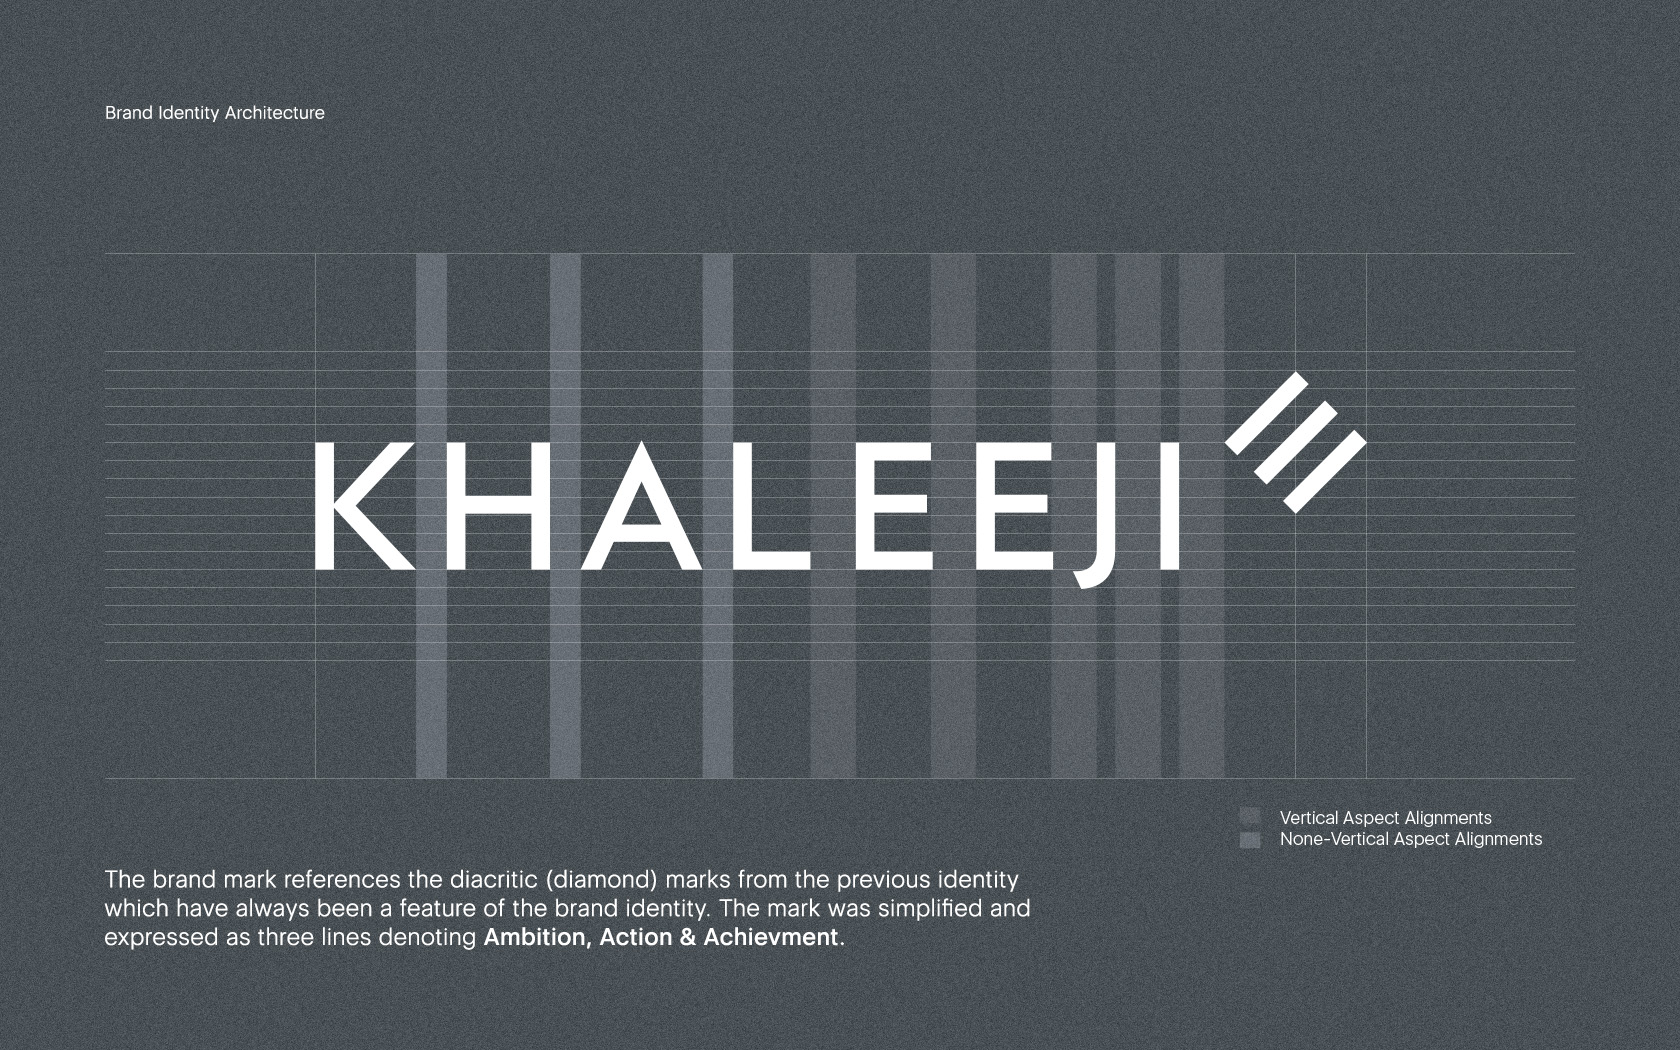 Khaleeji. Brand identity architecture